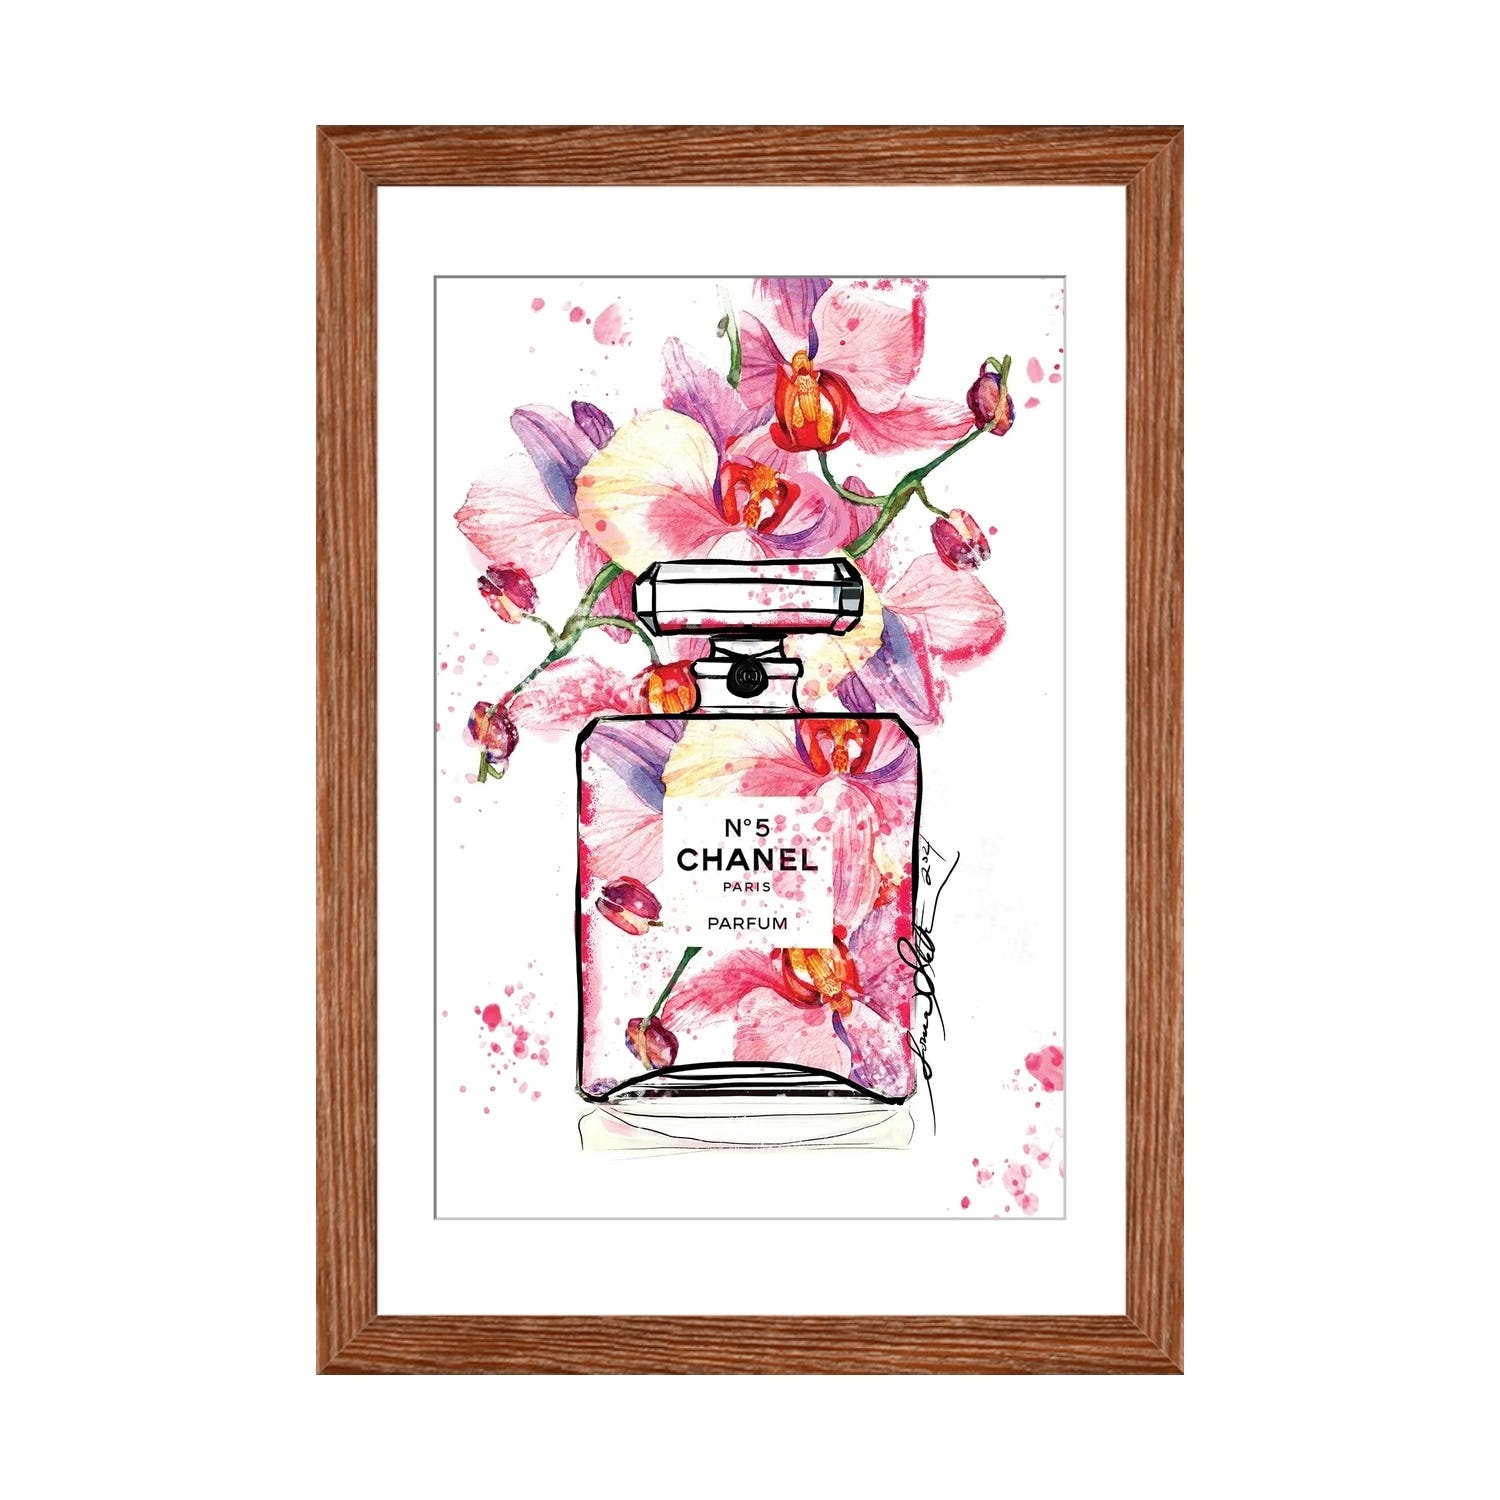 coco chanel pink perfume